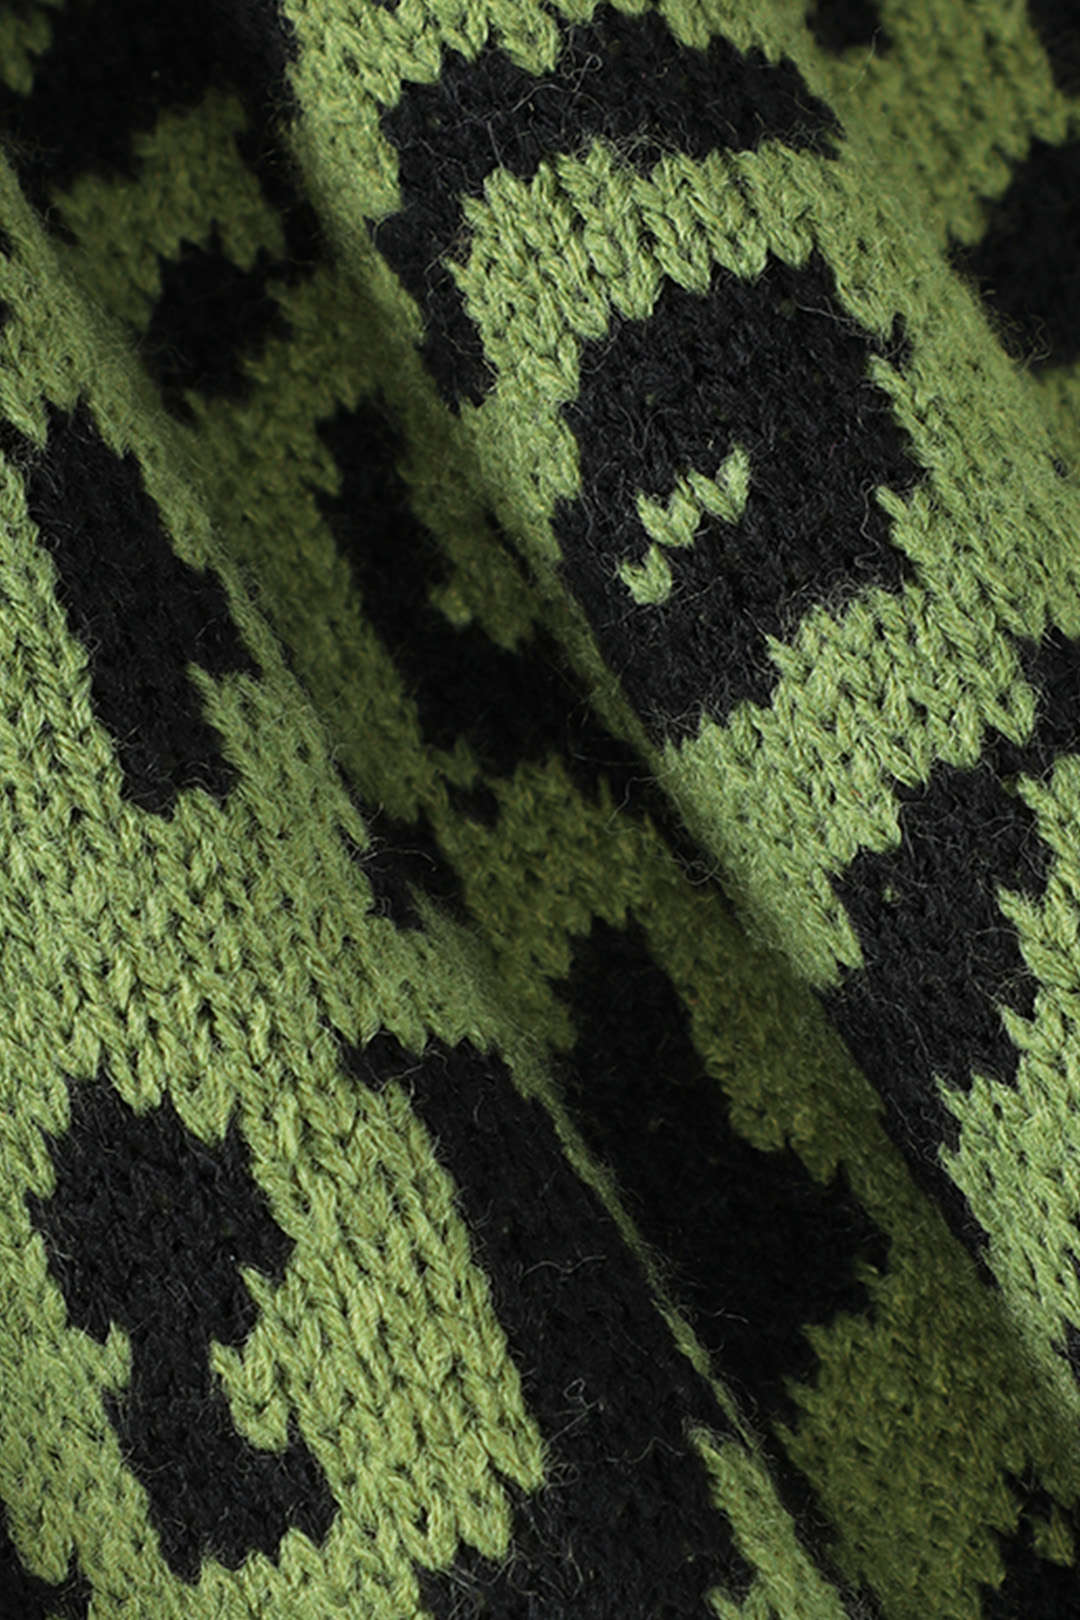 Frayed Leopard Sweater